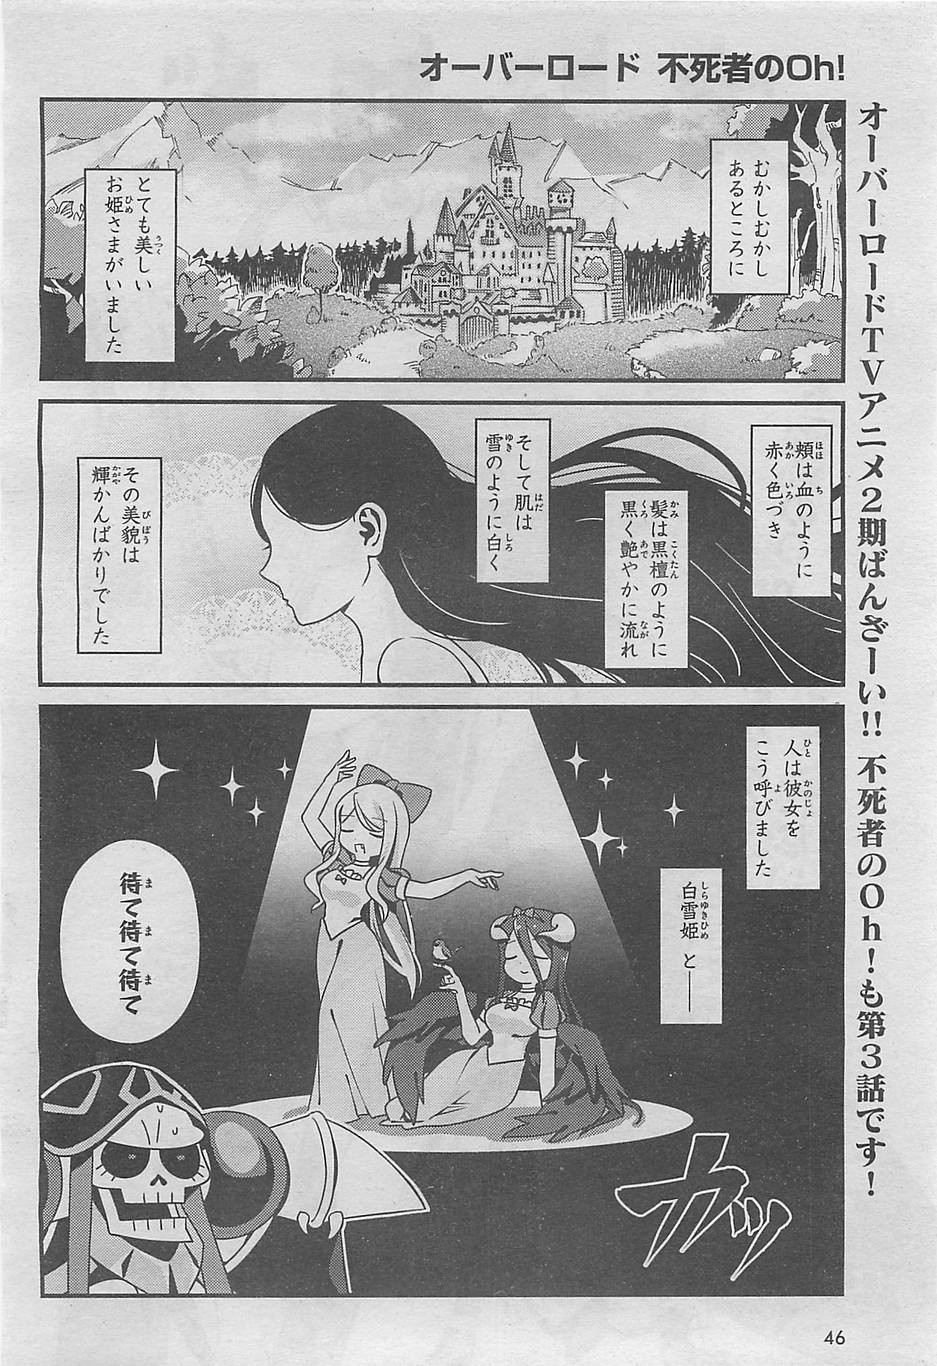 Overlord-Fushisha-no-Oh - Chapter 03 - Page 2